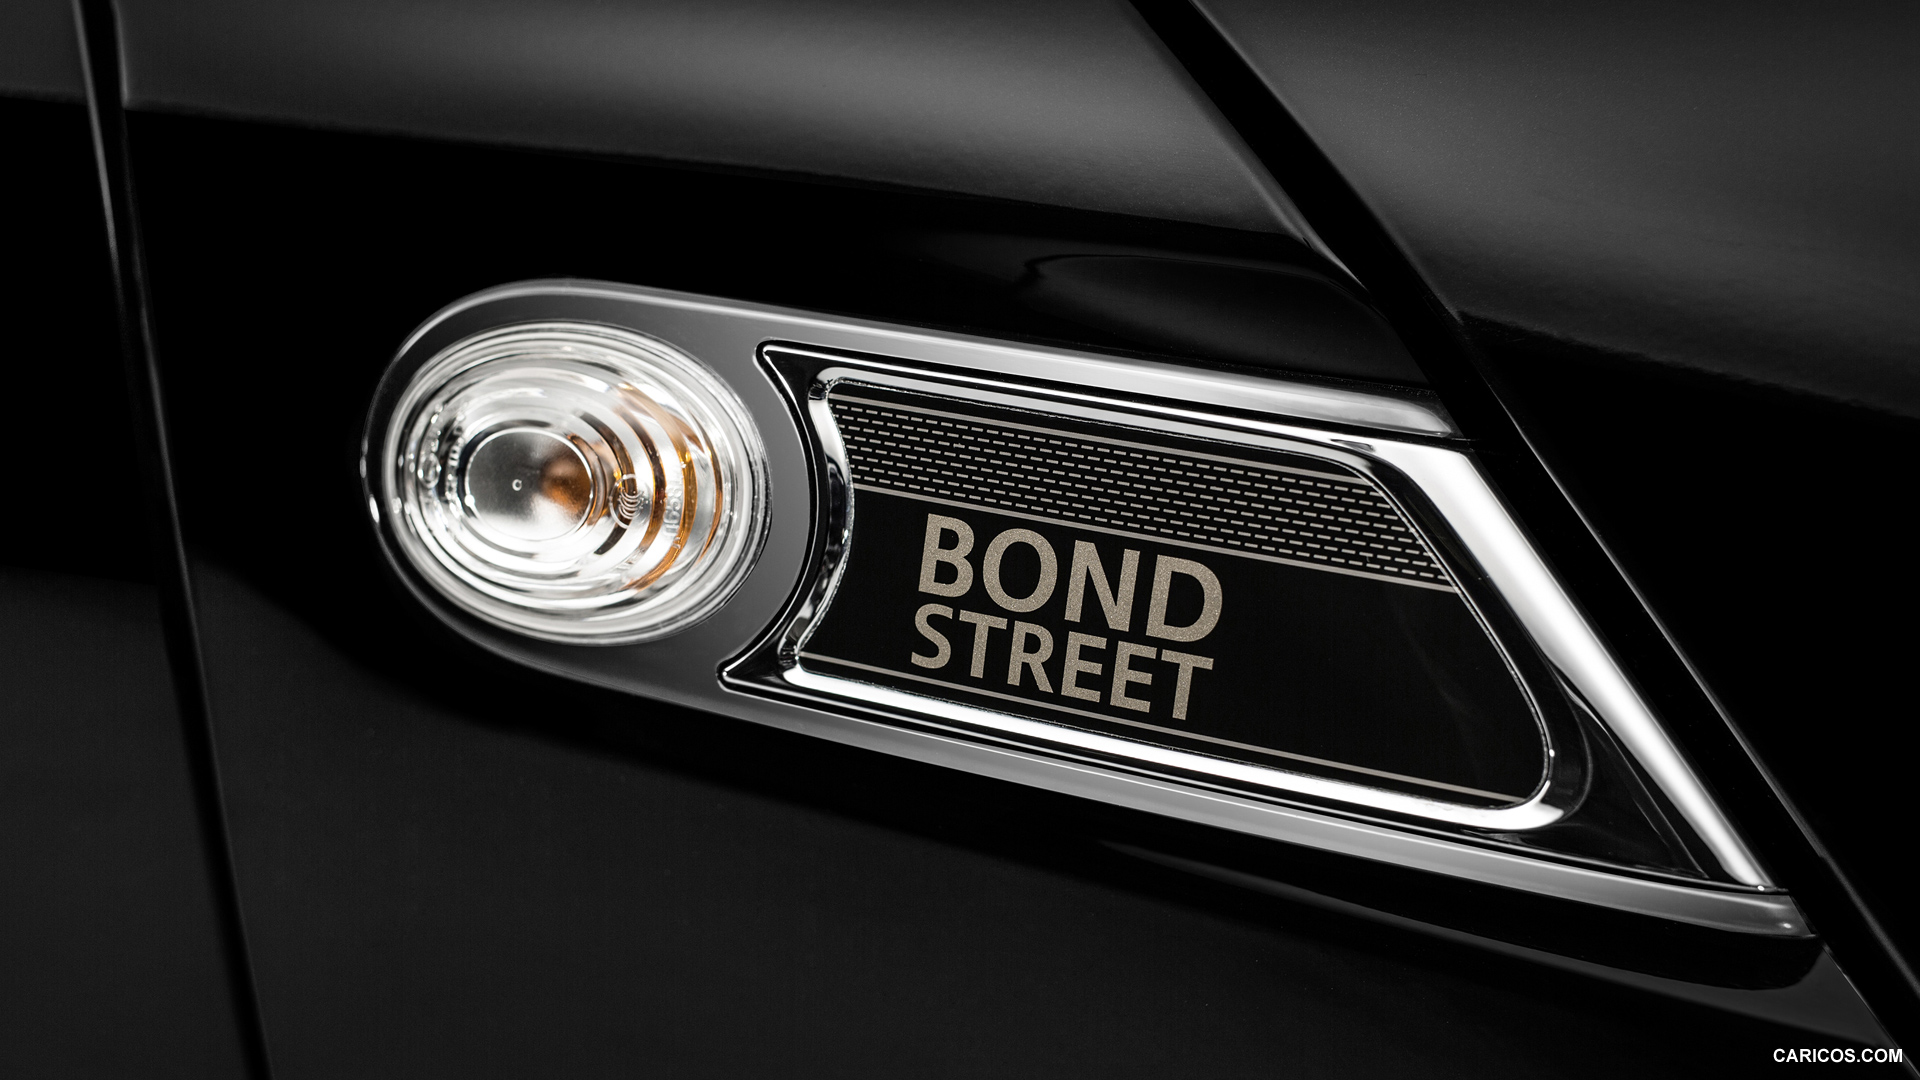 2013 MINI Clubman Bond Street  - Badge, #9 of 21